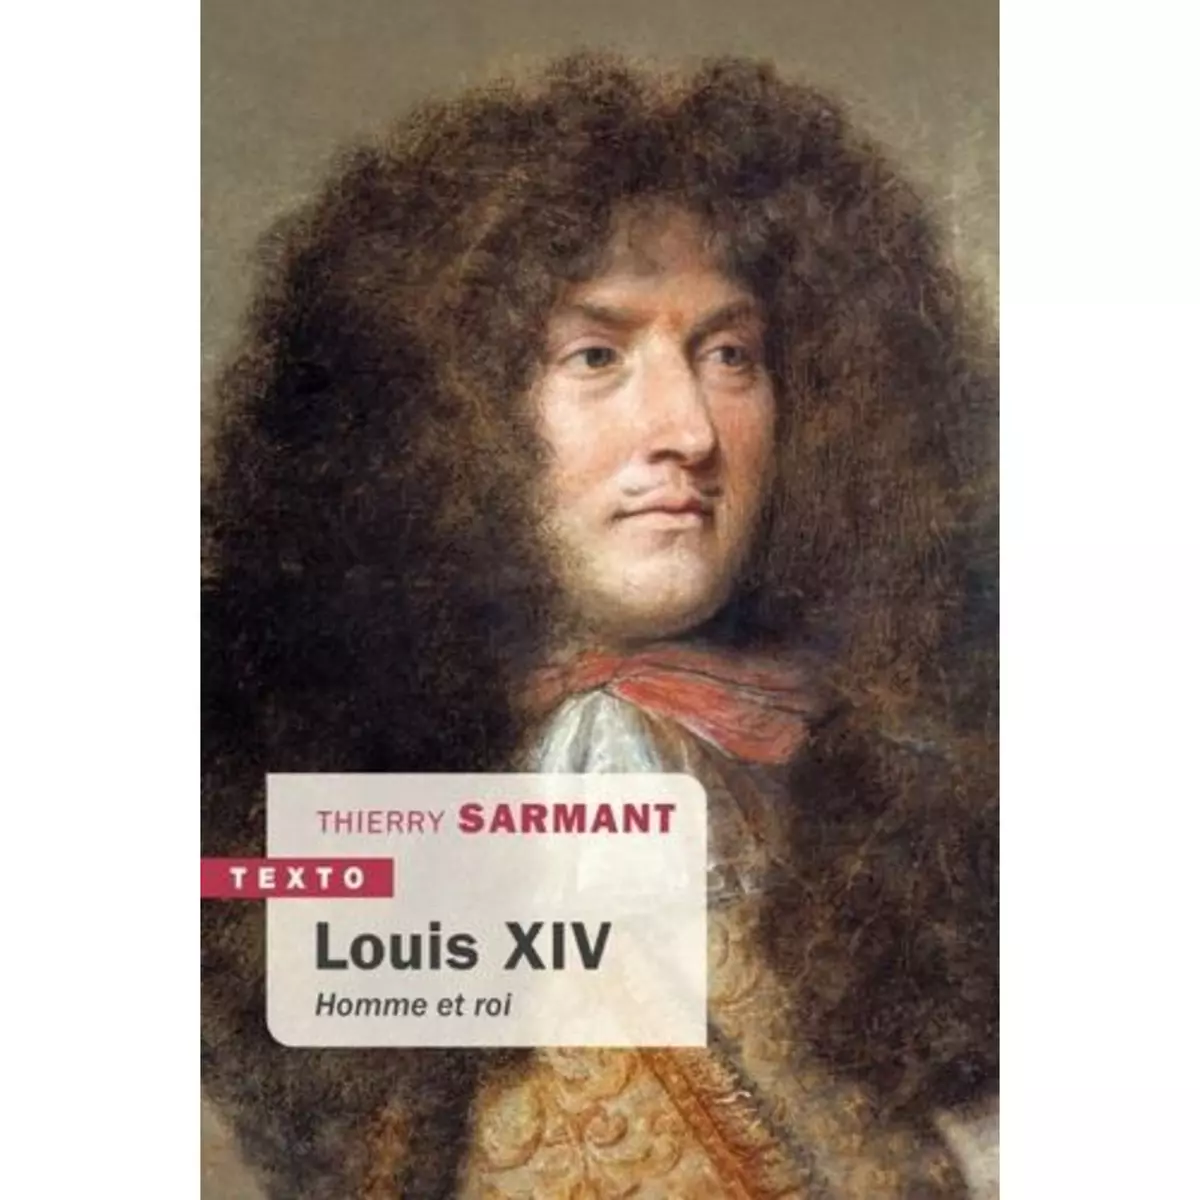  LOUIS XIV. HOMME ET ROI, Sarmant Thierry